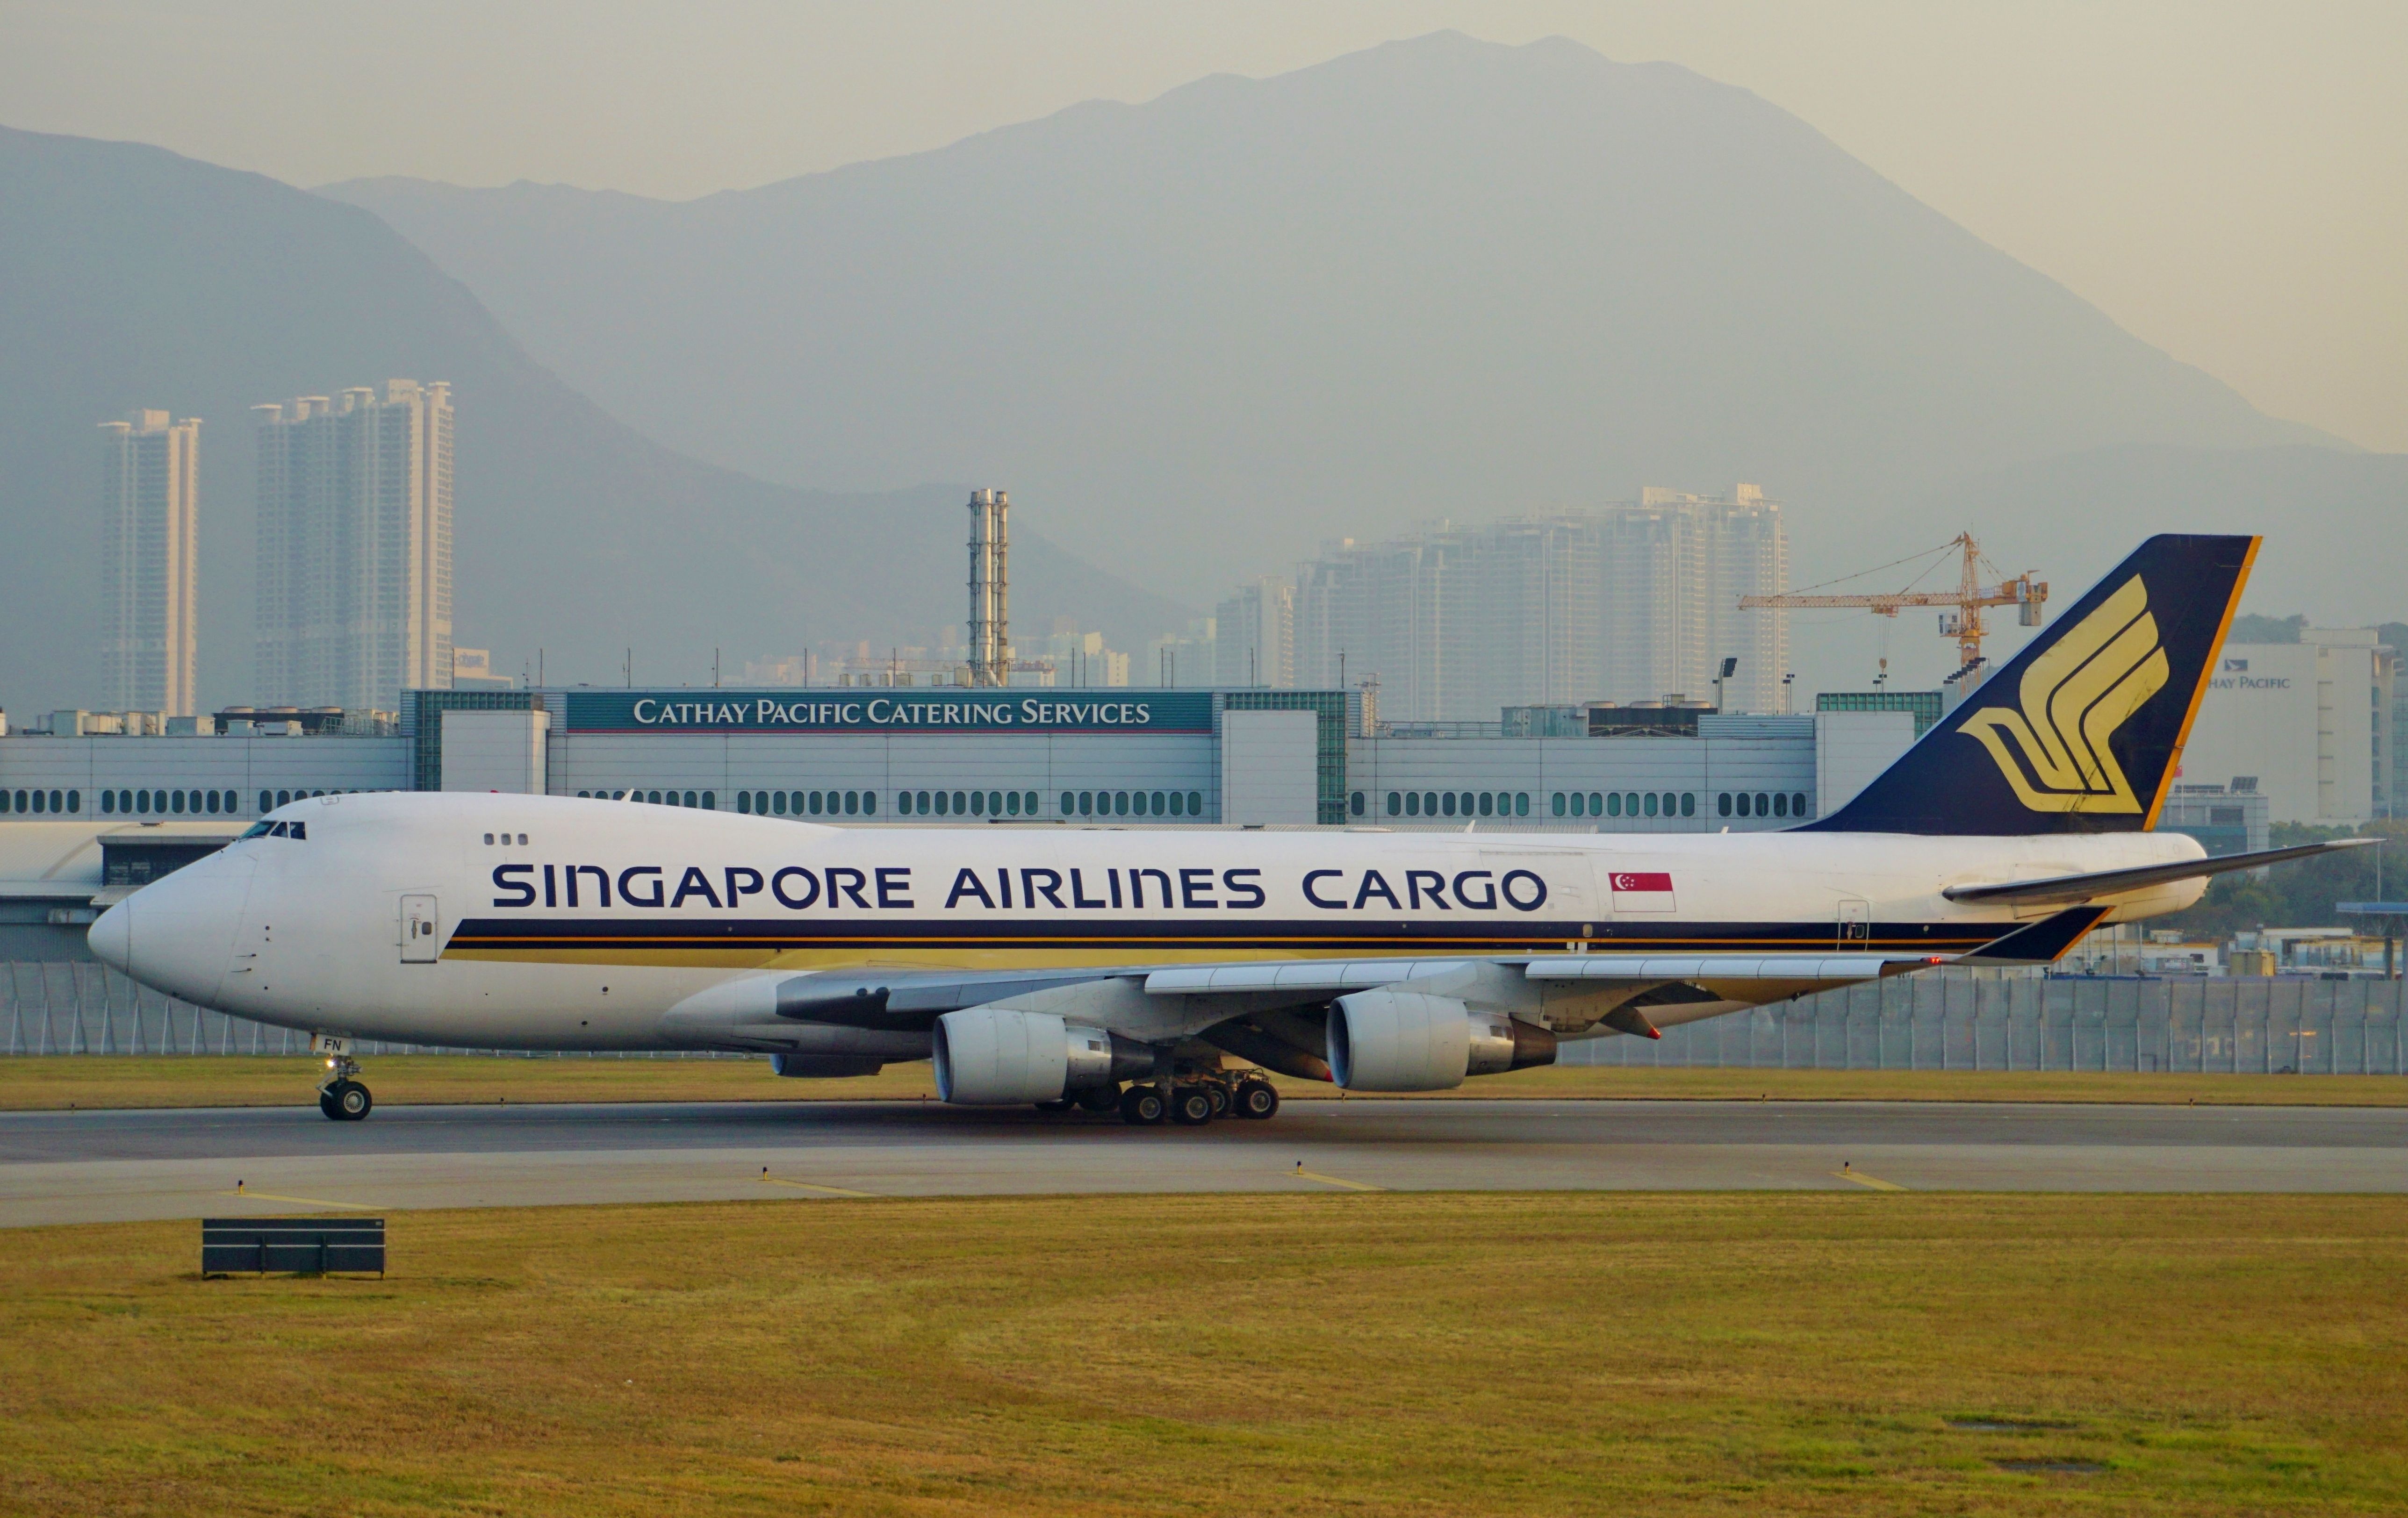 Singapore Airlines Cargo Boeing 747-400F